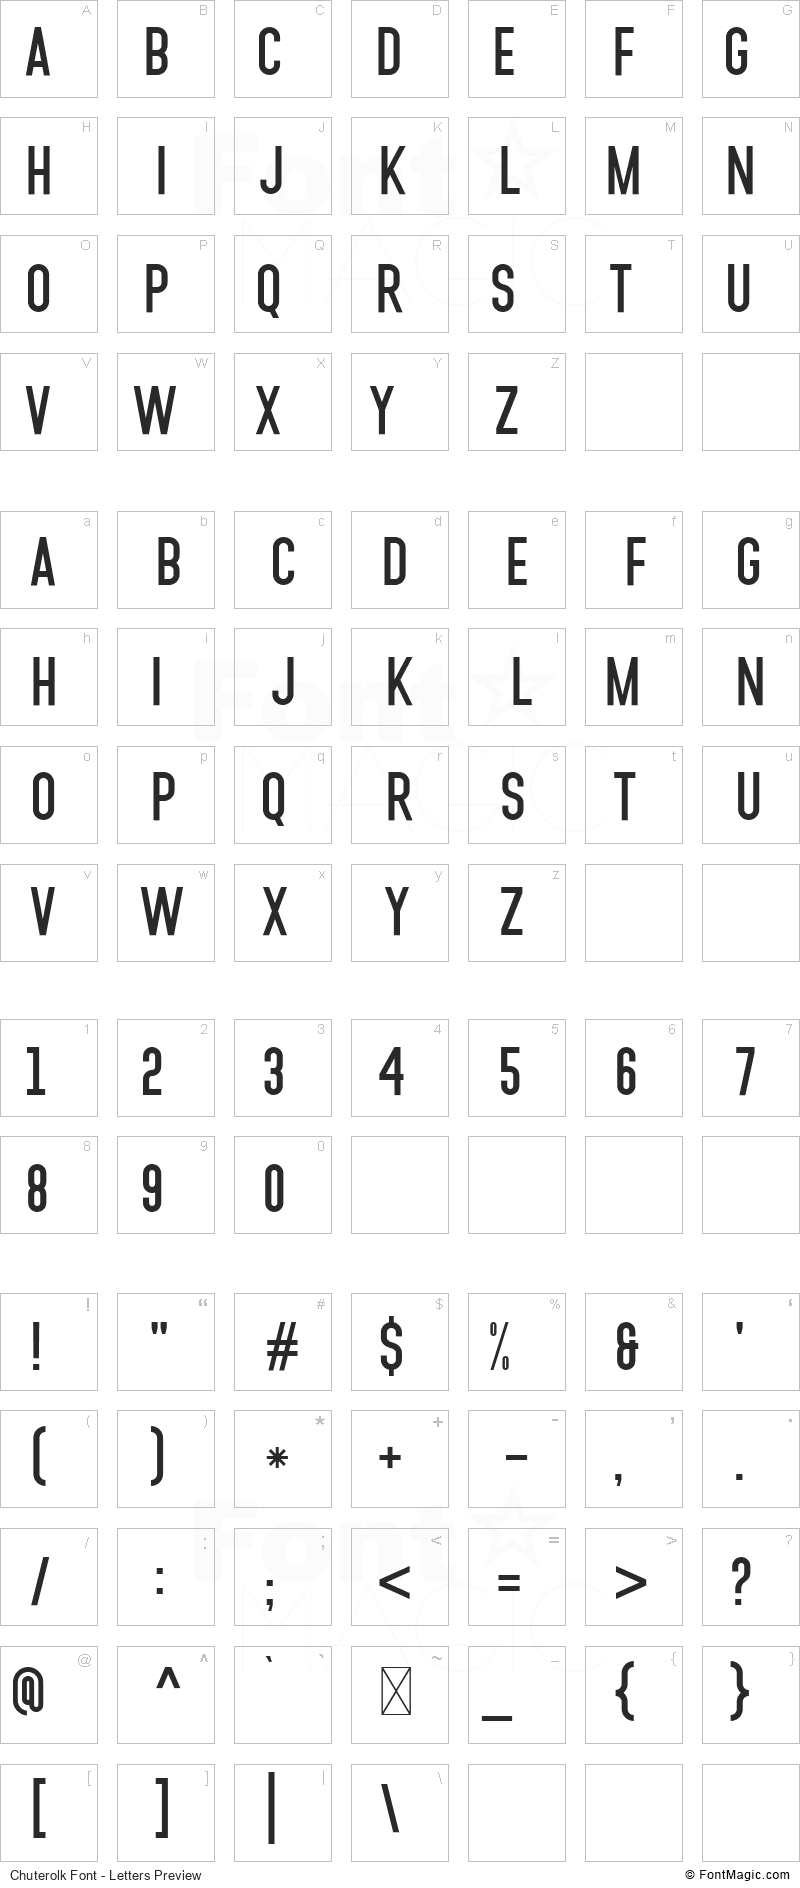 Chuterolk Font - All Latters Preview Chart